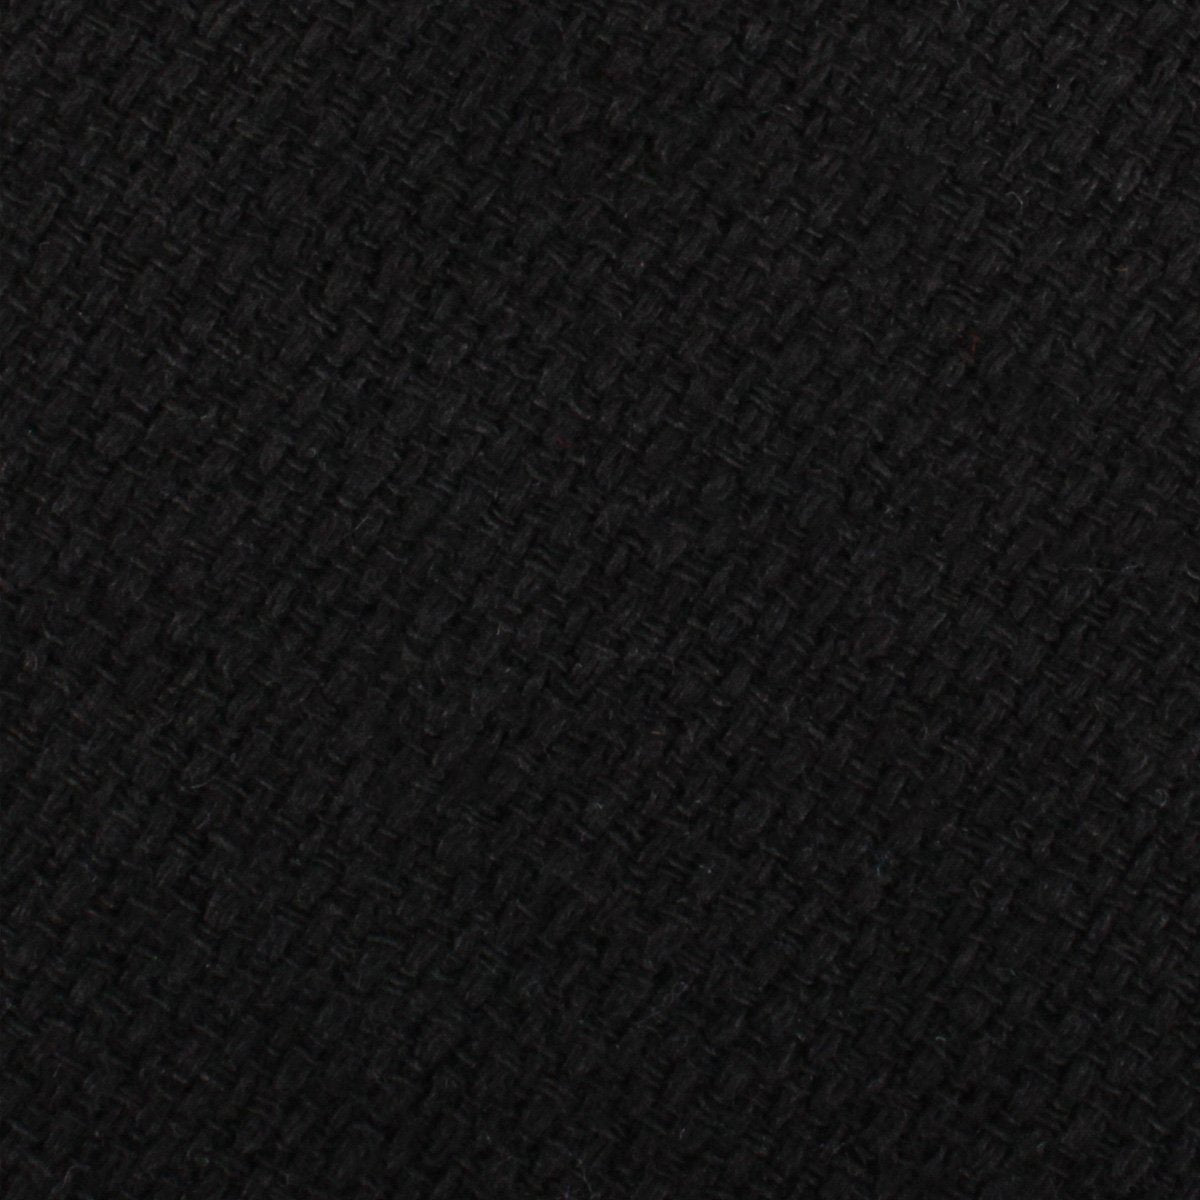 St Lucia Black Linen Skinny Tie Fabric